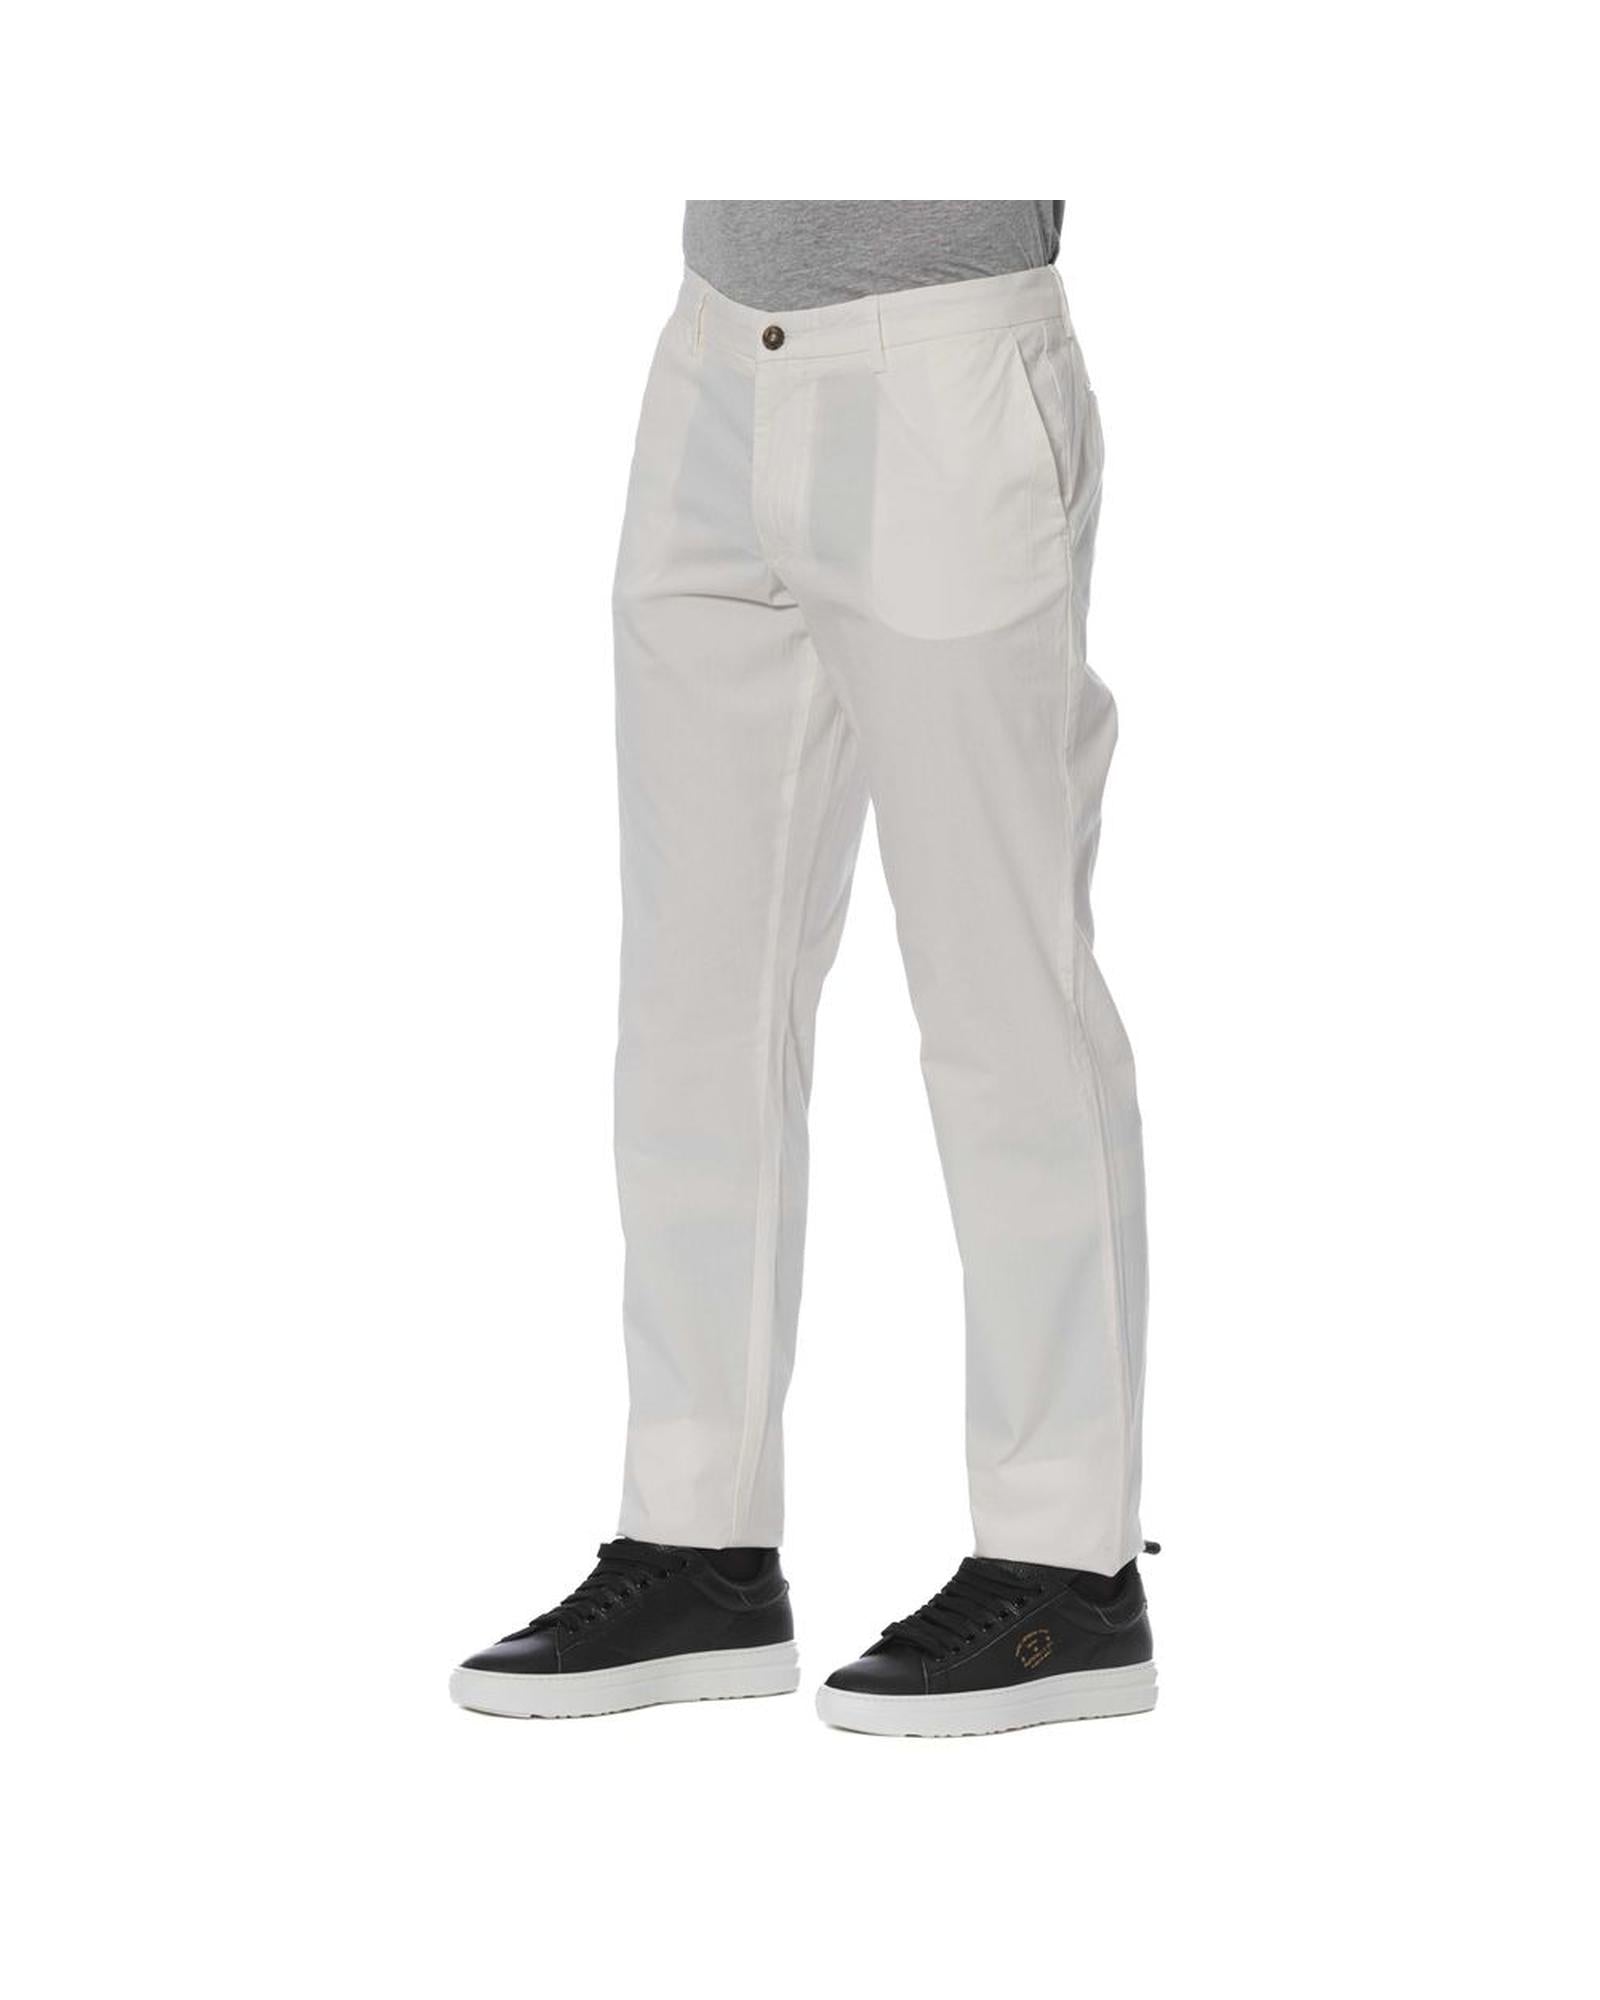 Men's White Cotton Jeans & Pant - W46 US